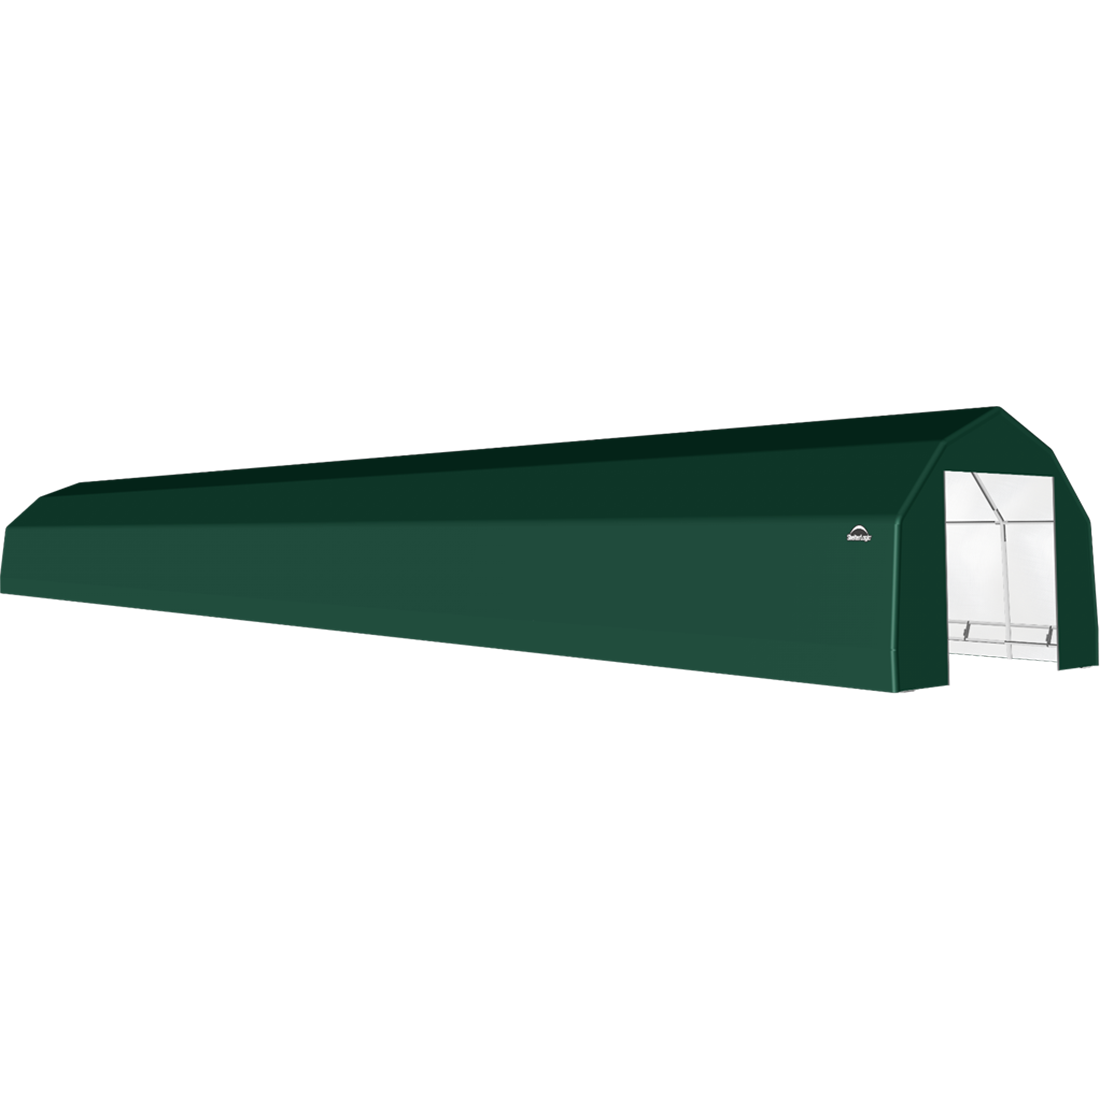 ShelterTech SP Series Barn Shelter, 15 ft. x 92 ft. x 11 ft. Heavy Duty PVC 14.5 oz. Green